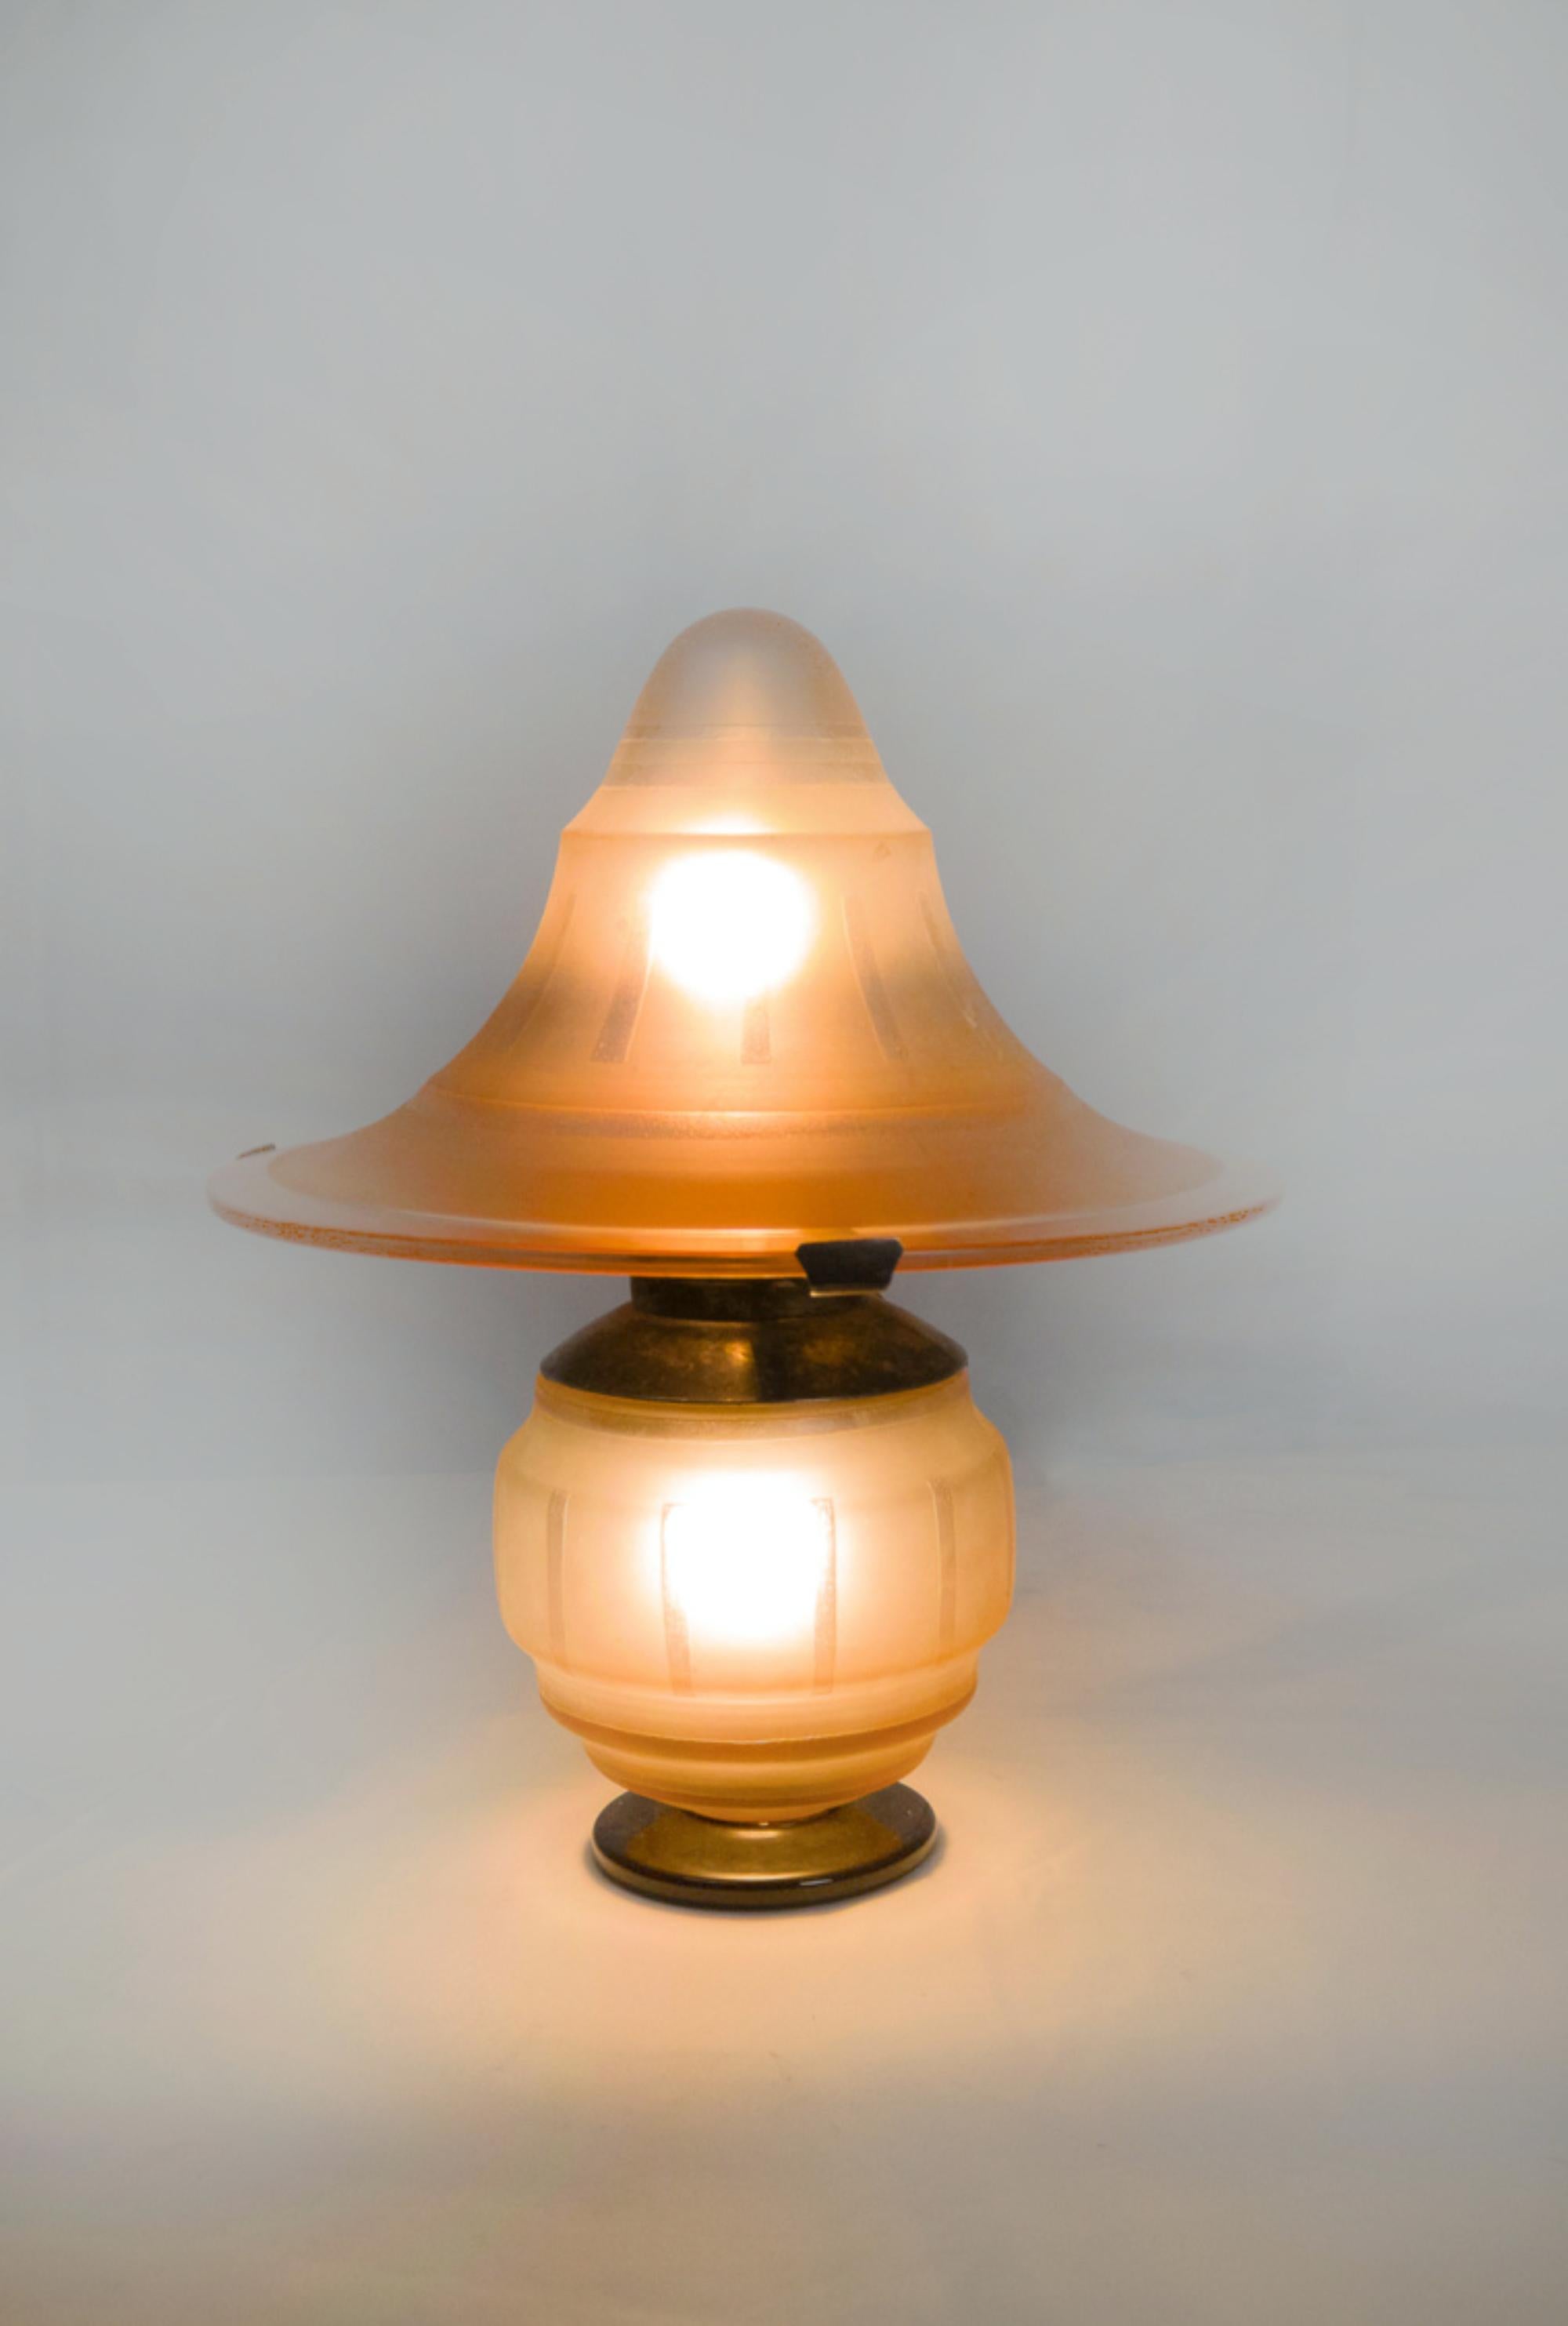 1930s art deco lamp